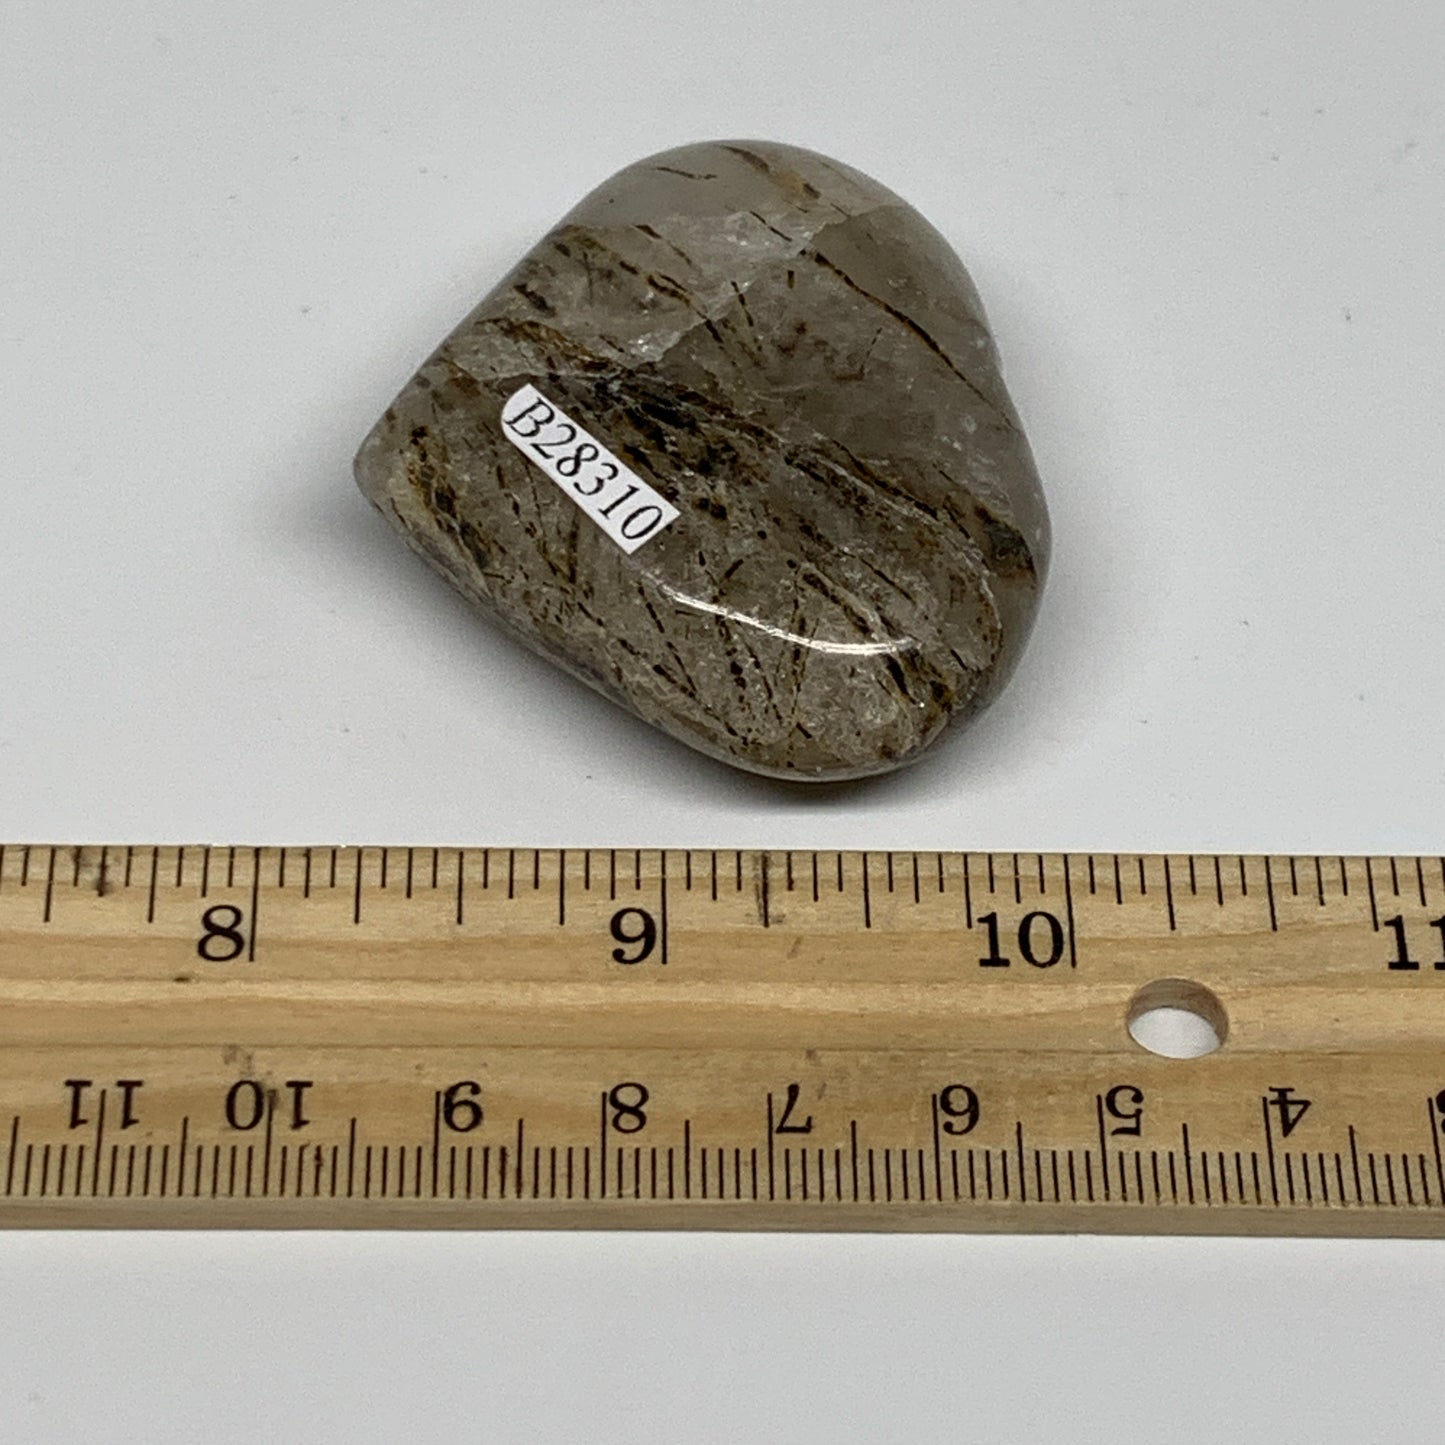 58.9g, 1.7"x2"x0.7", Natural Untreated Small Rutile Quartz Crystal Heart Reiki,